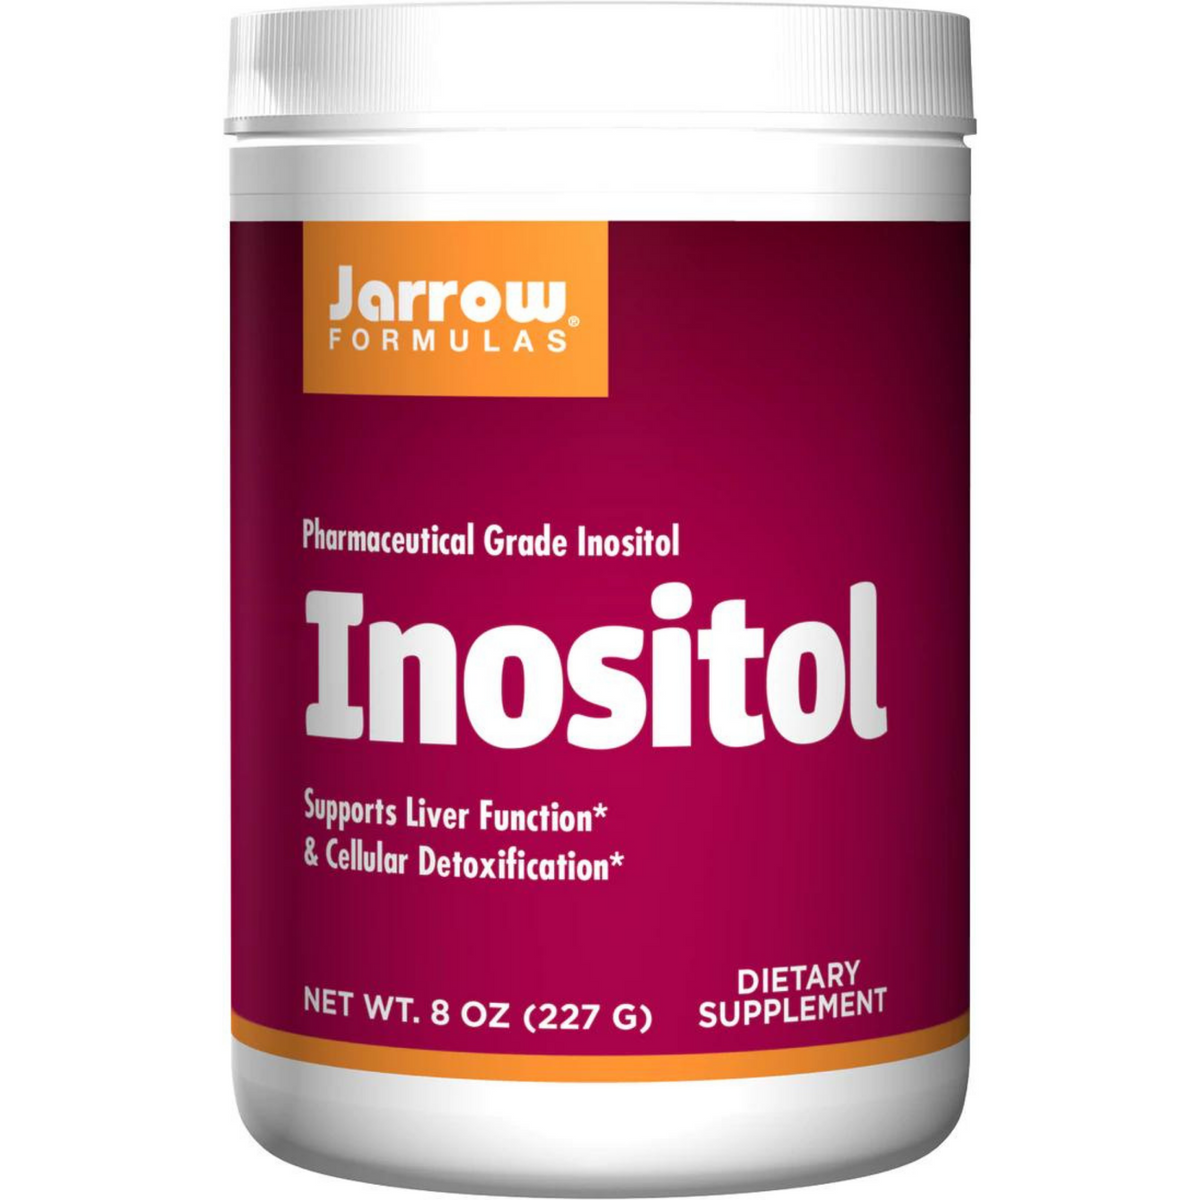 Primary Image of Inositol Powder (8 oz)